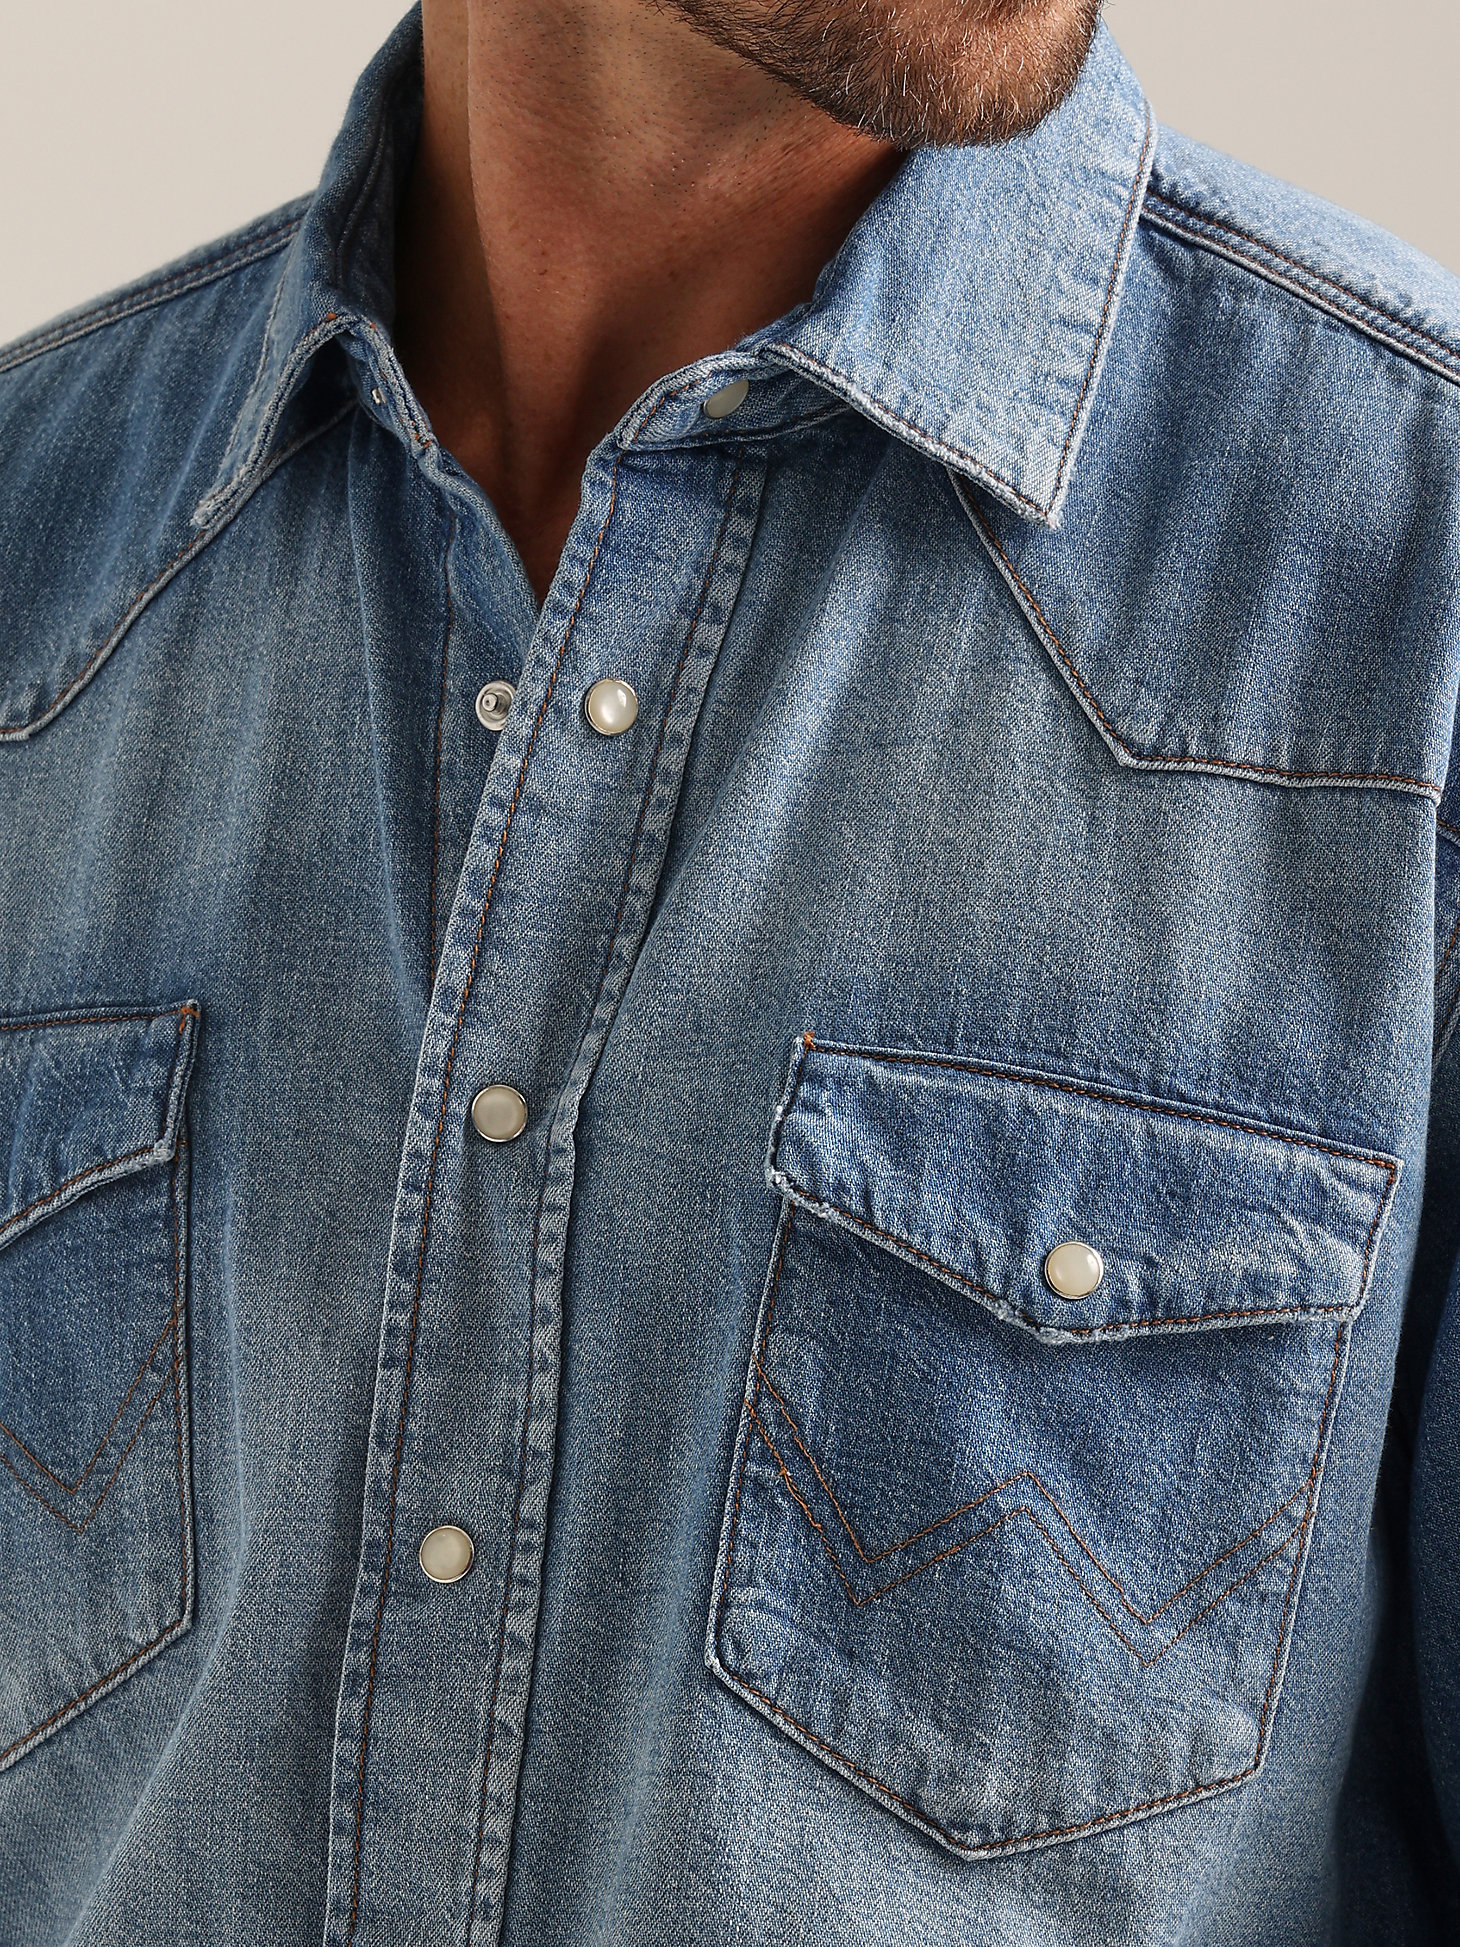 GANT x Wrangler Men's Denim Western Shirt in Mid Blue Vintage alternative view 4